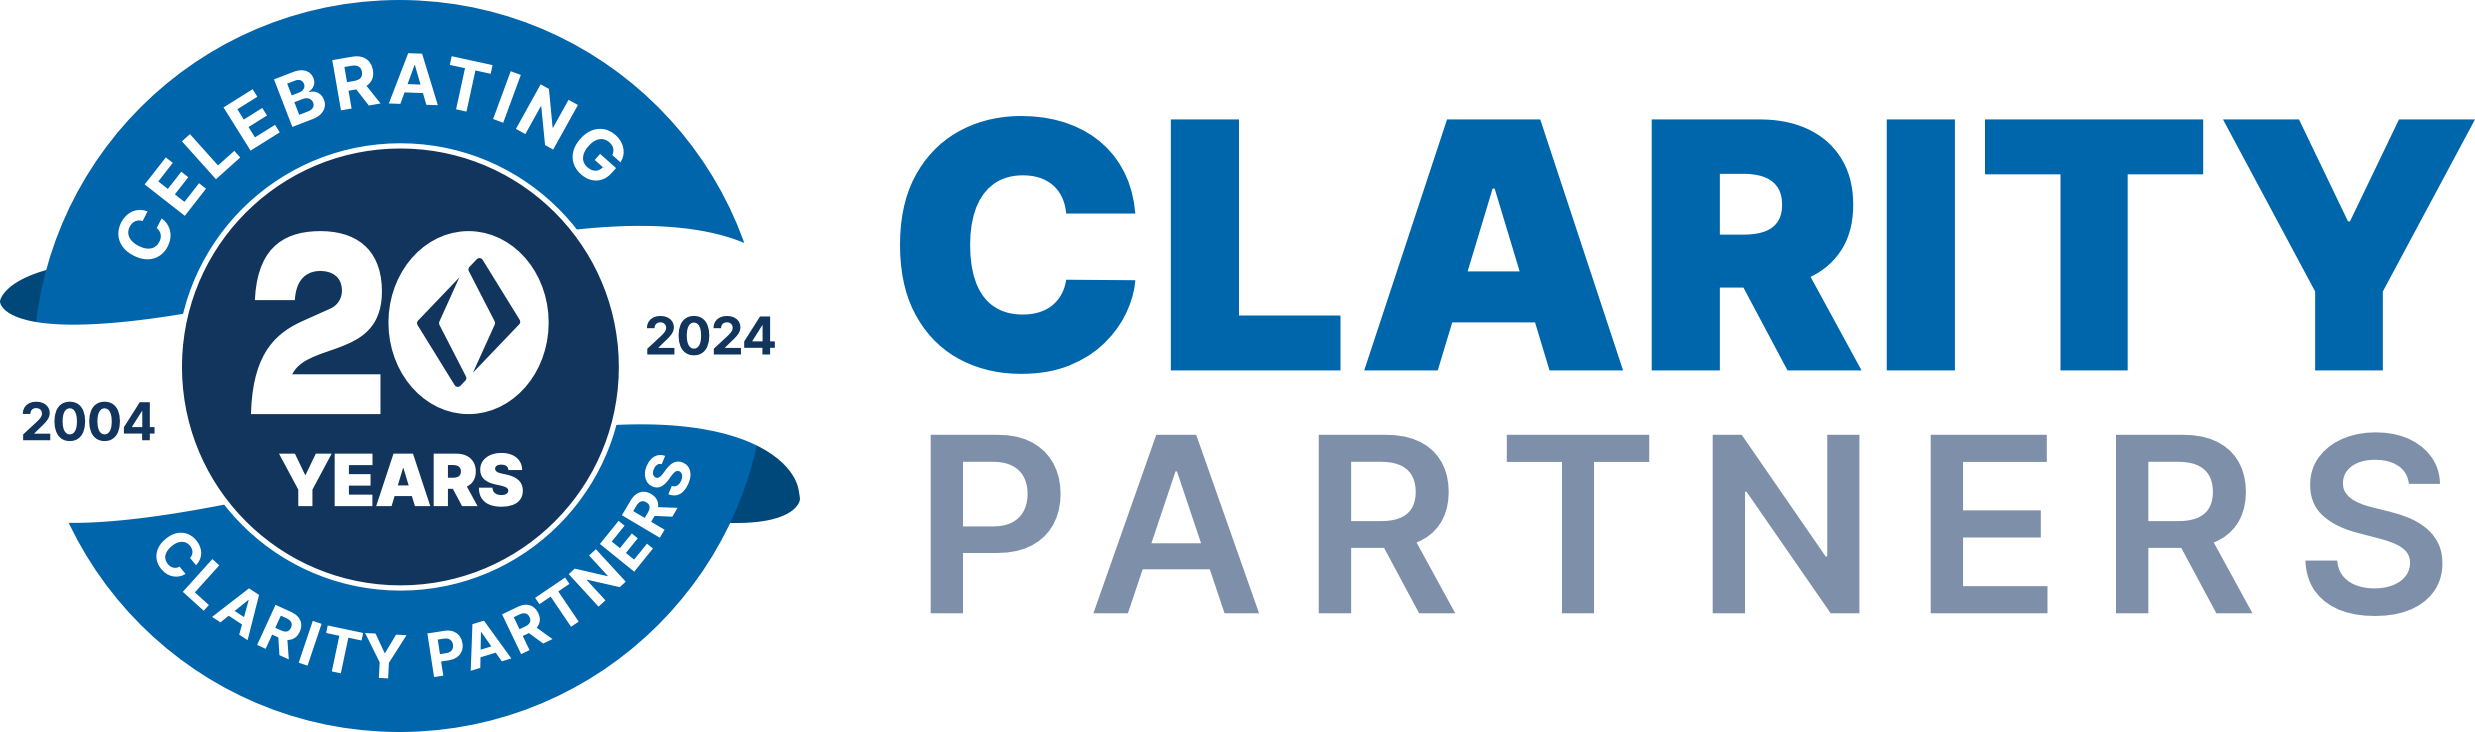 Clarity Partners 20 years logo